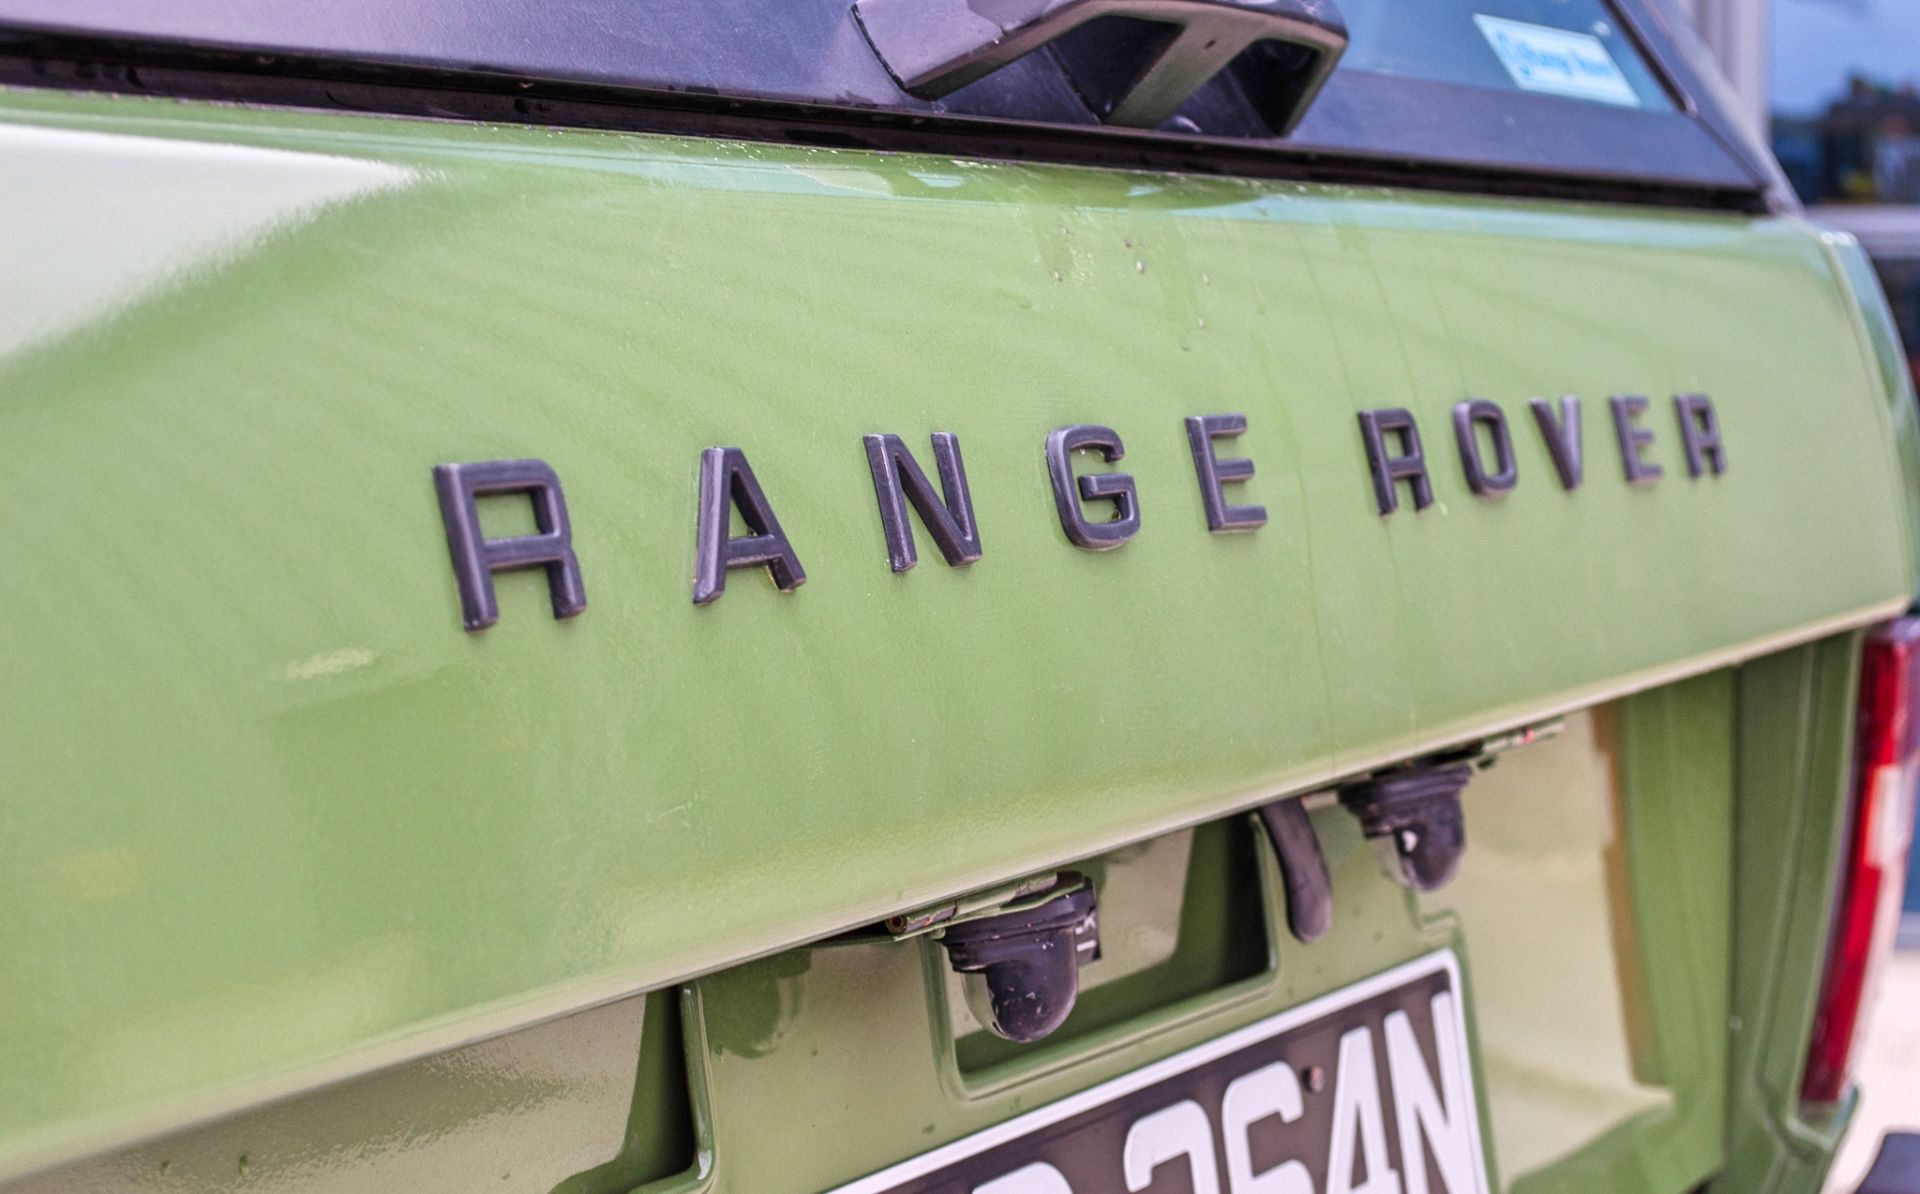 1975 Land Rover Range Rover Classic 3470 cc 3 door 4 wheel drive - Image 51 of 55